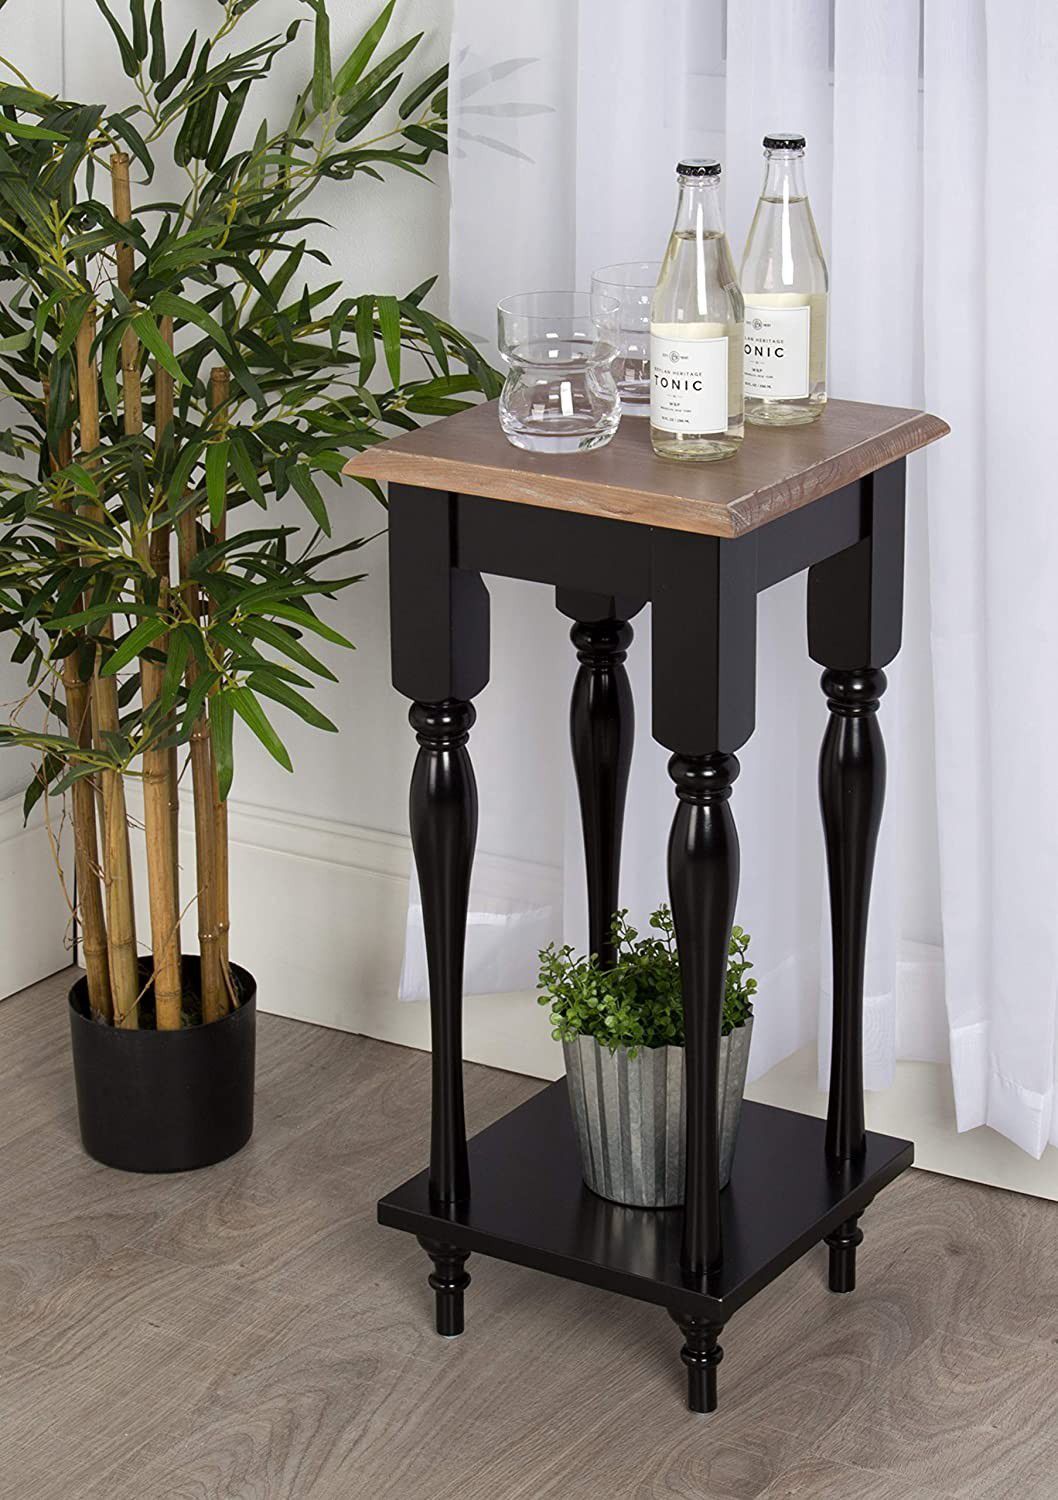 Decorative Modern Plant Stand with Shelf, Black